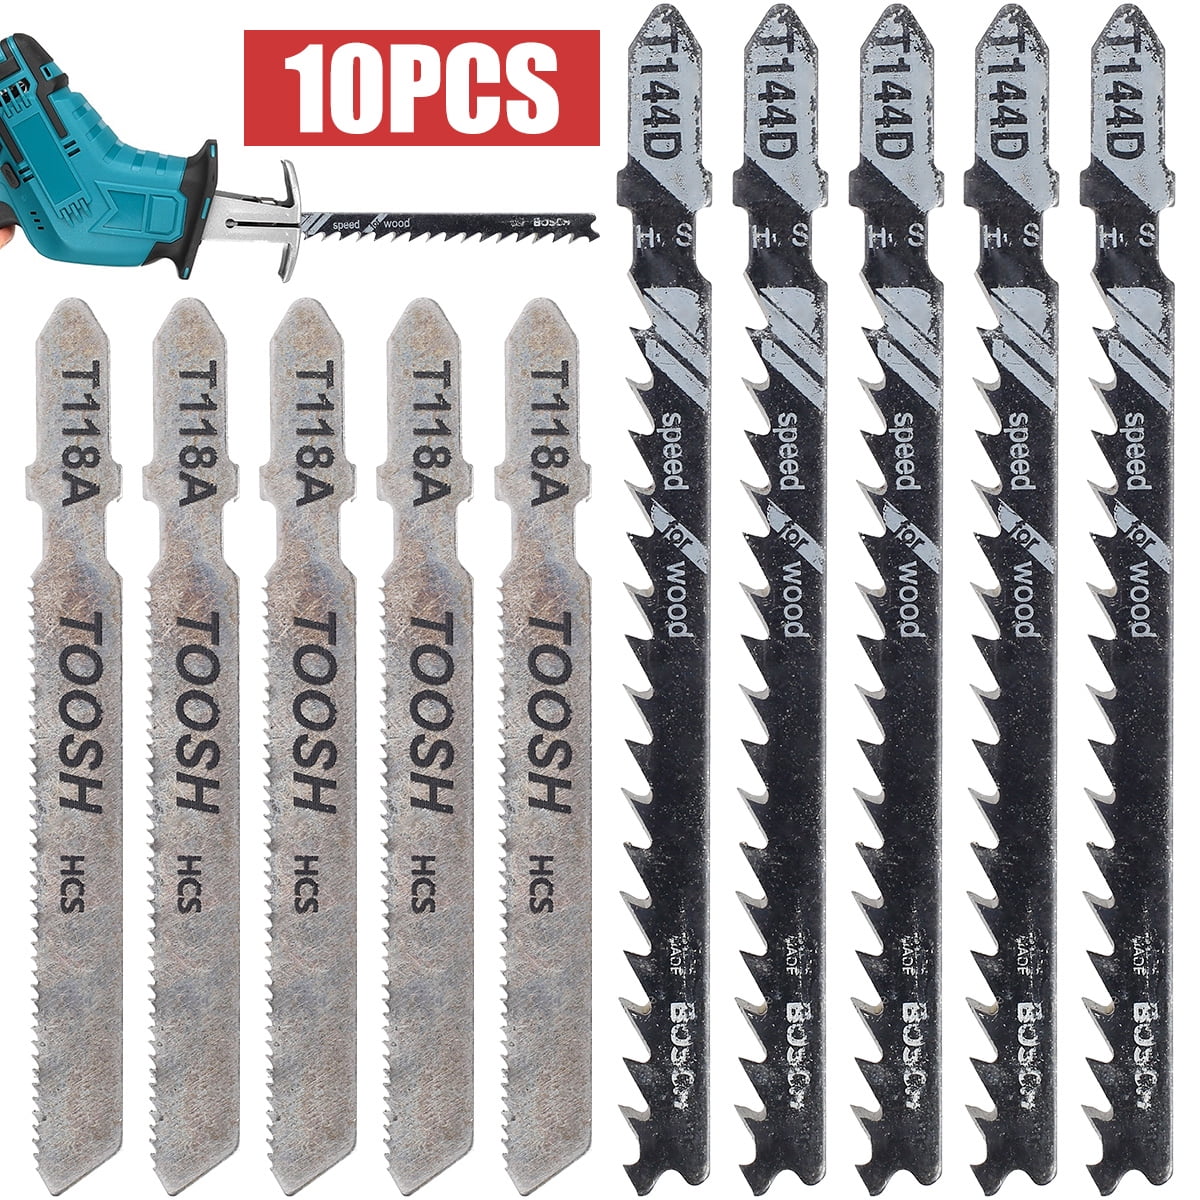 10Pcs Reciprocating Sabre Saw Blades Set Wood & Metal Cutting For Bos 